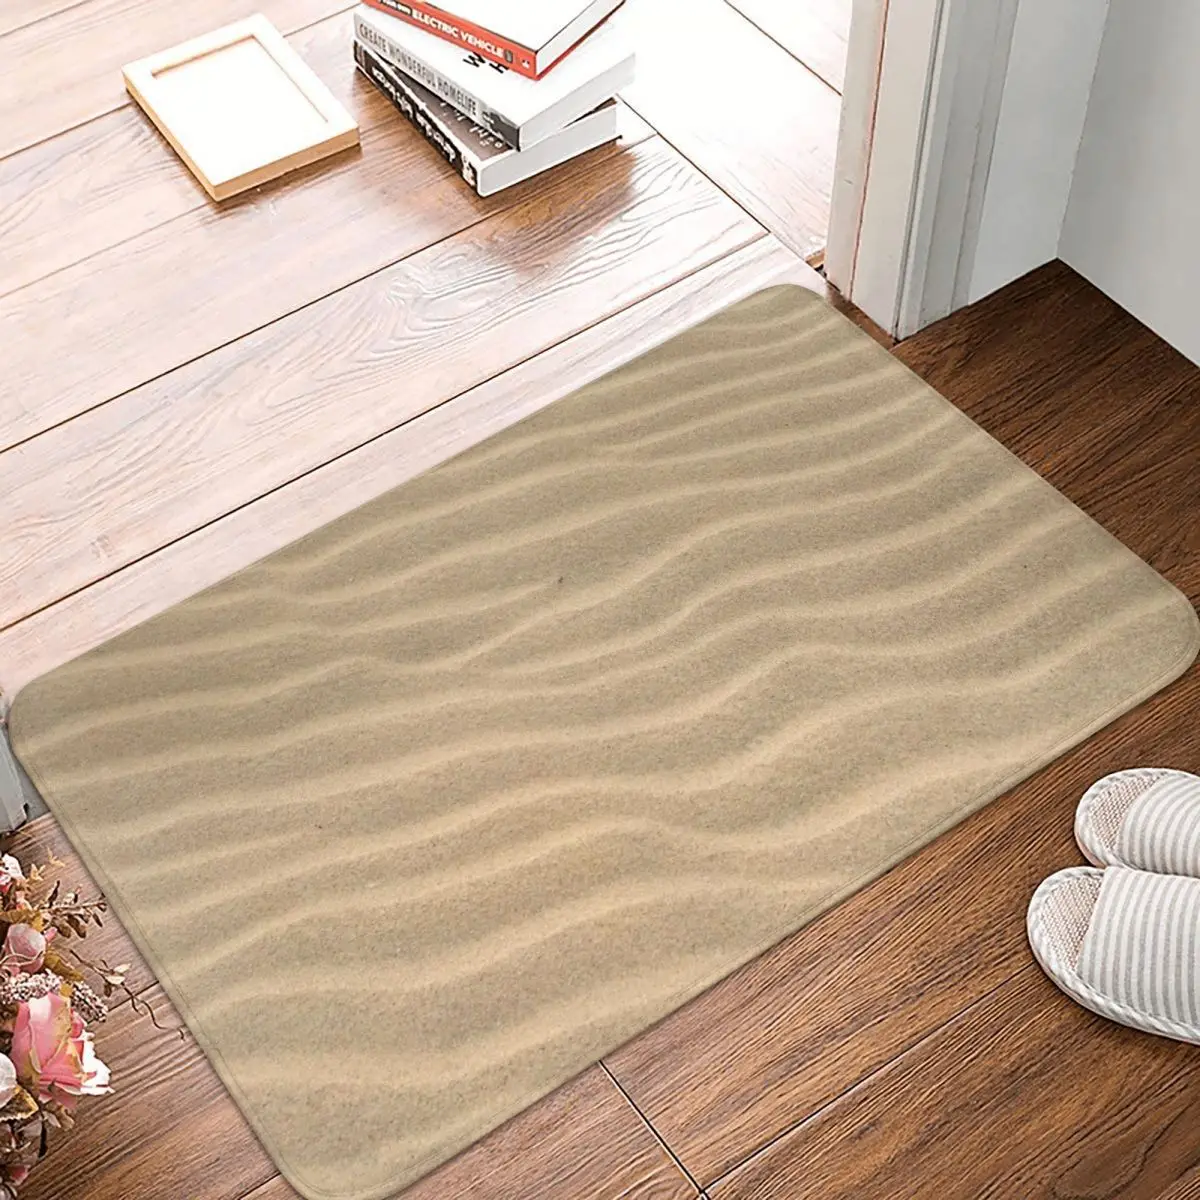 

Desert Sand Doormat Carpet Mat Rug Polyester PVC Non-Slip Floor Decor Bath Bathroom Kitchen Balcony 40x60